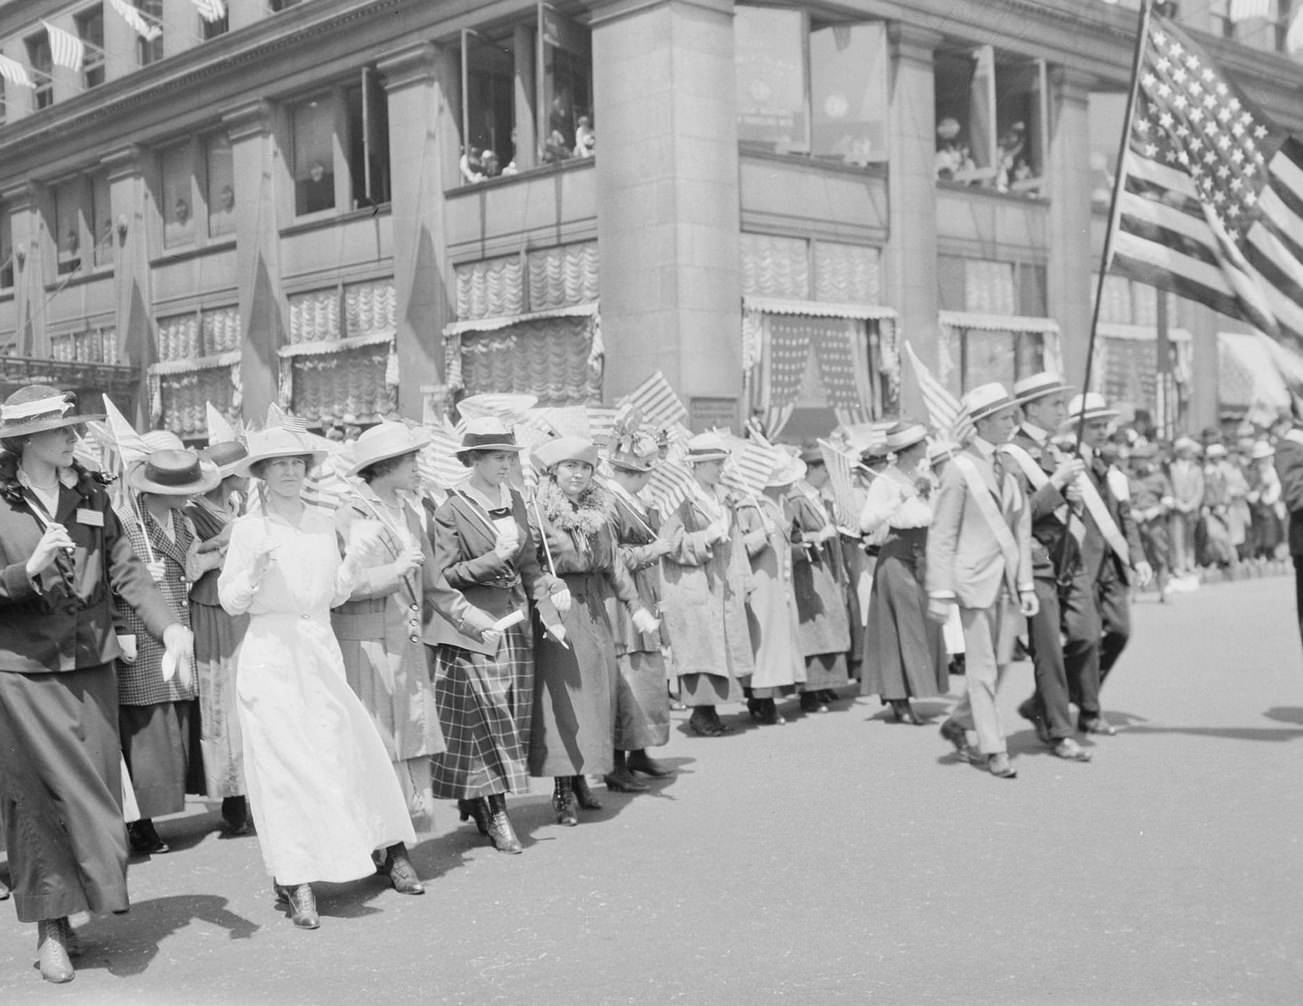 Suffragettes parade, Chicago, Illinois, 1910s.